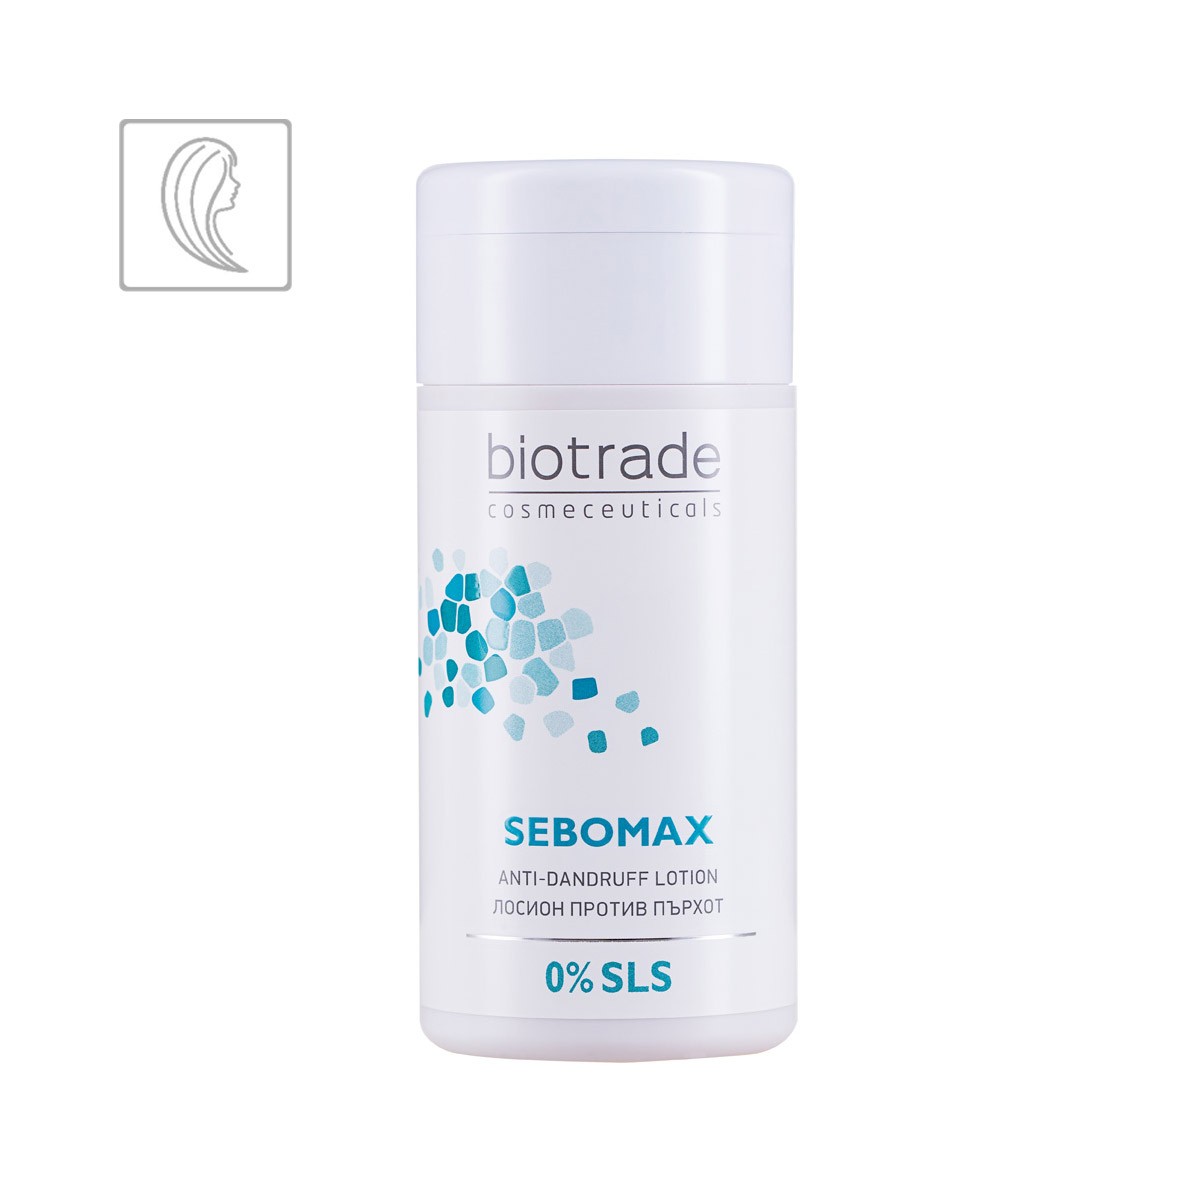 Sebomax Anti-Dandruff Lotion Biotrade vlasové mléko proti lupům